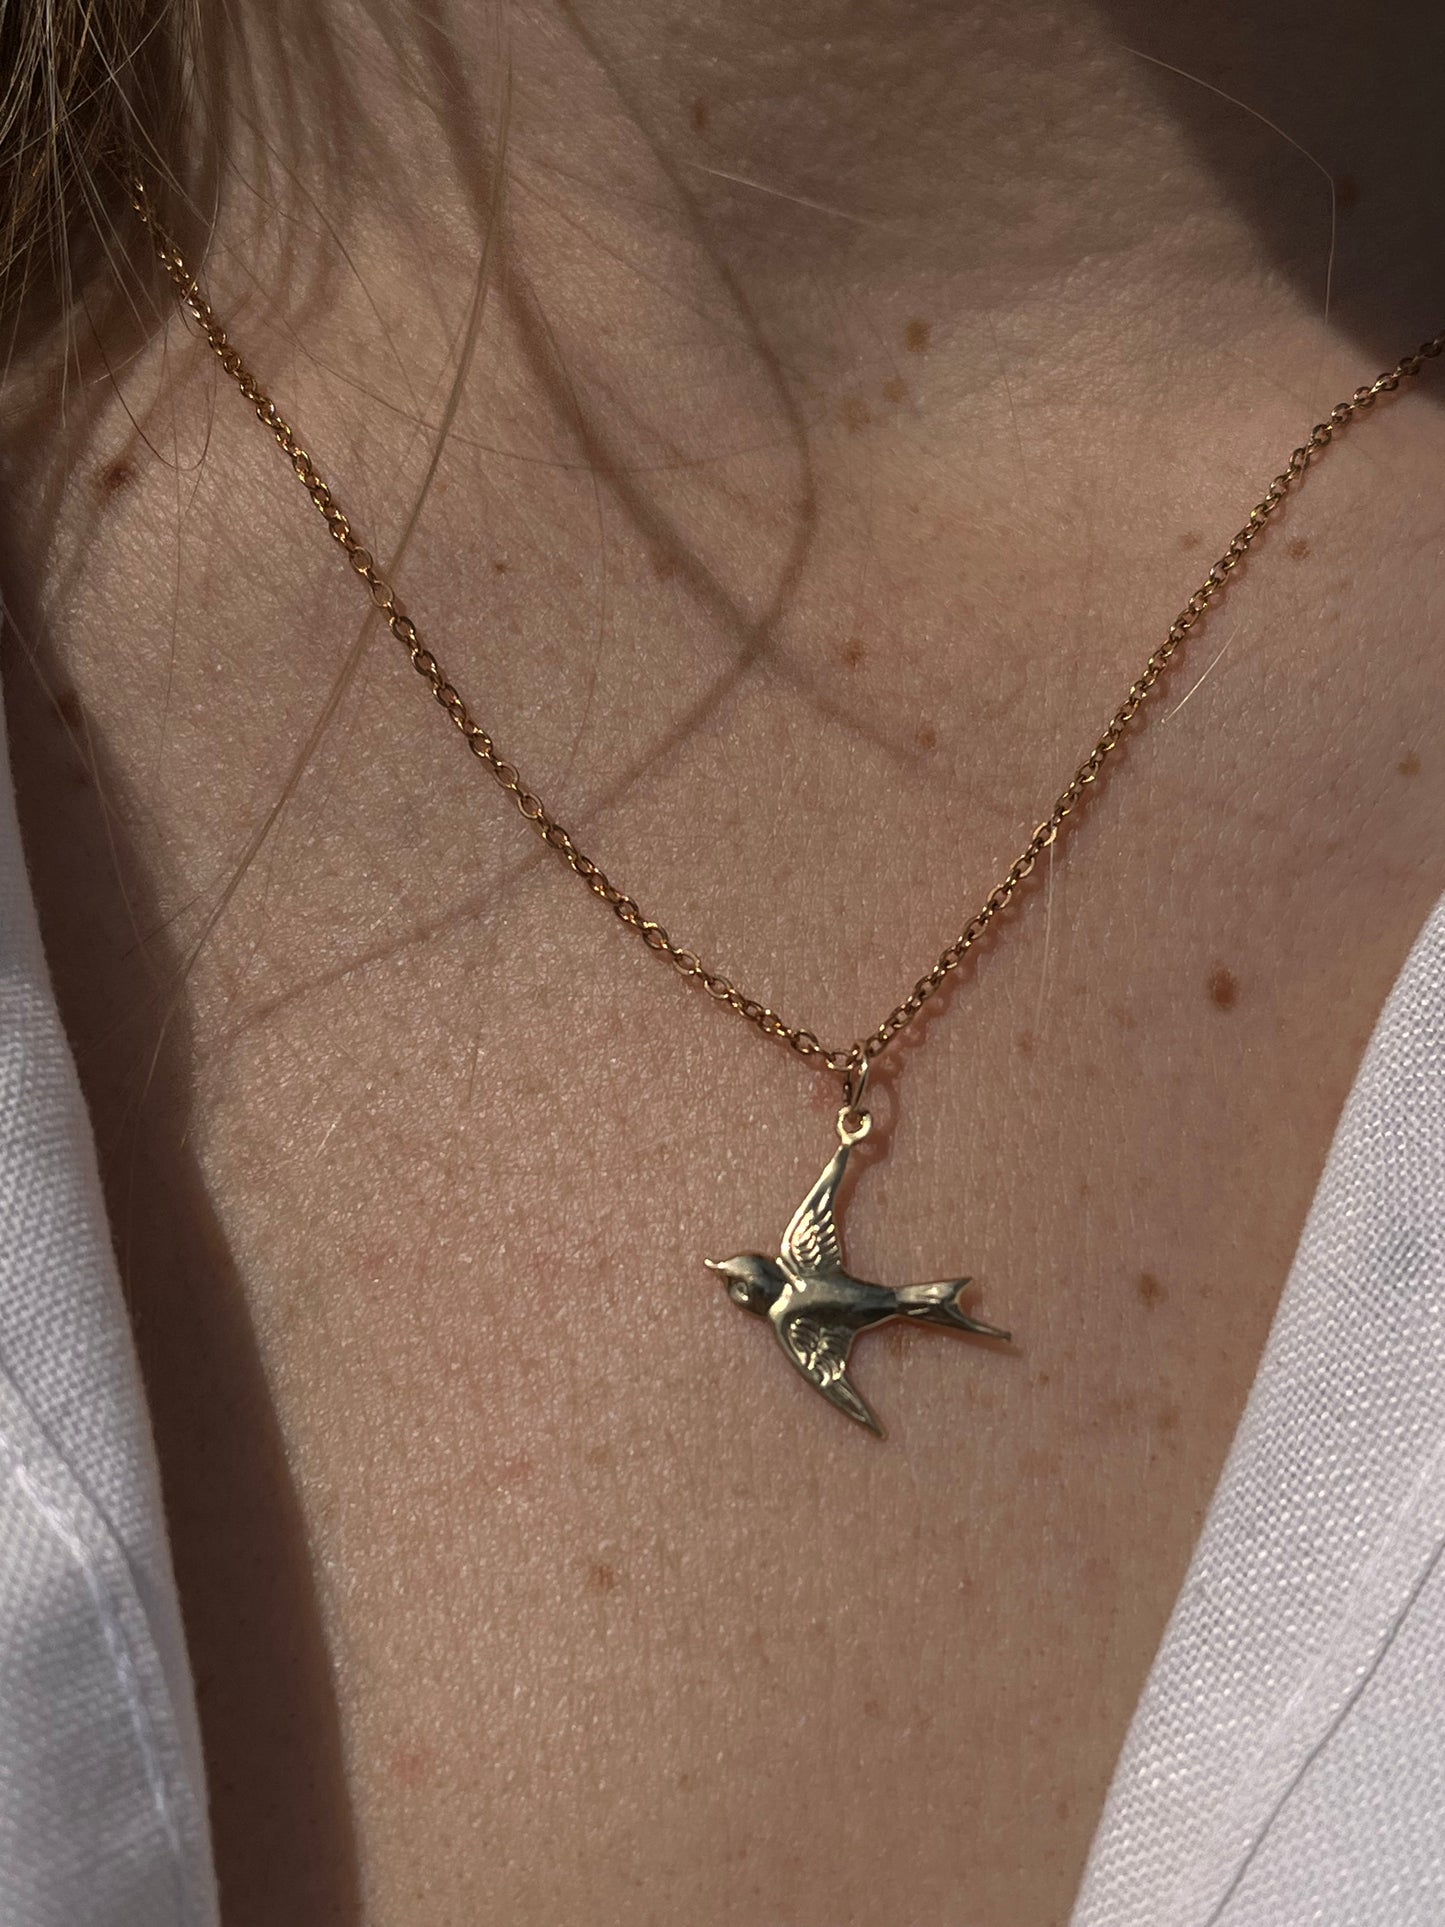 Golden Sparrow Necklace